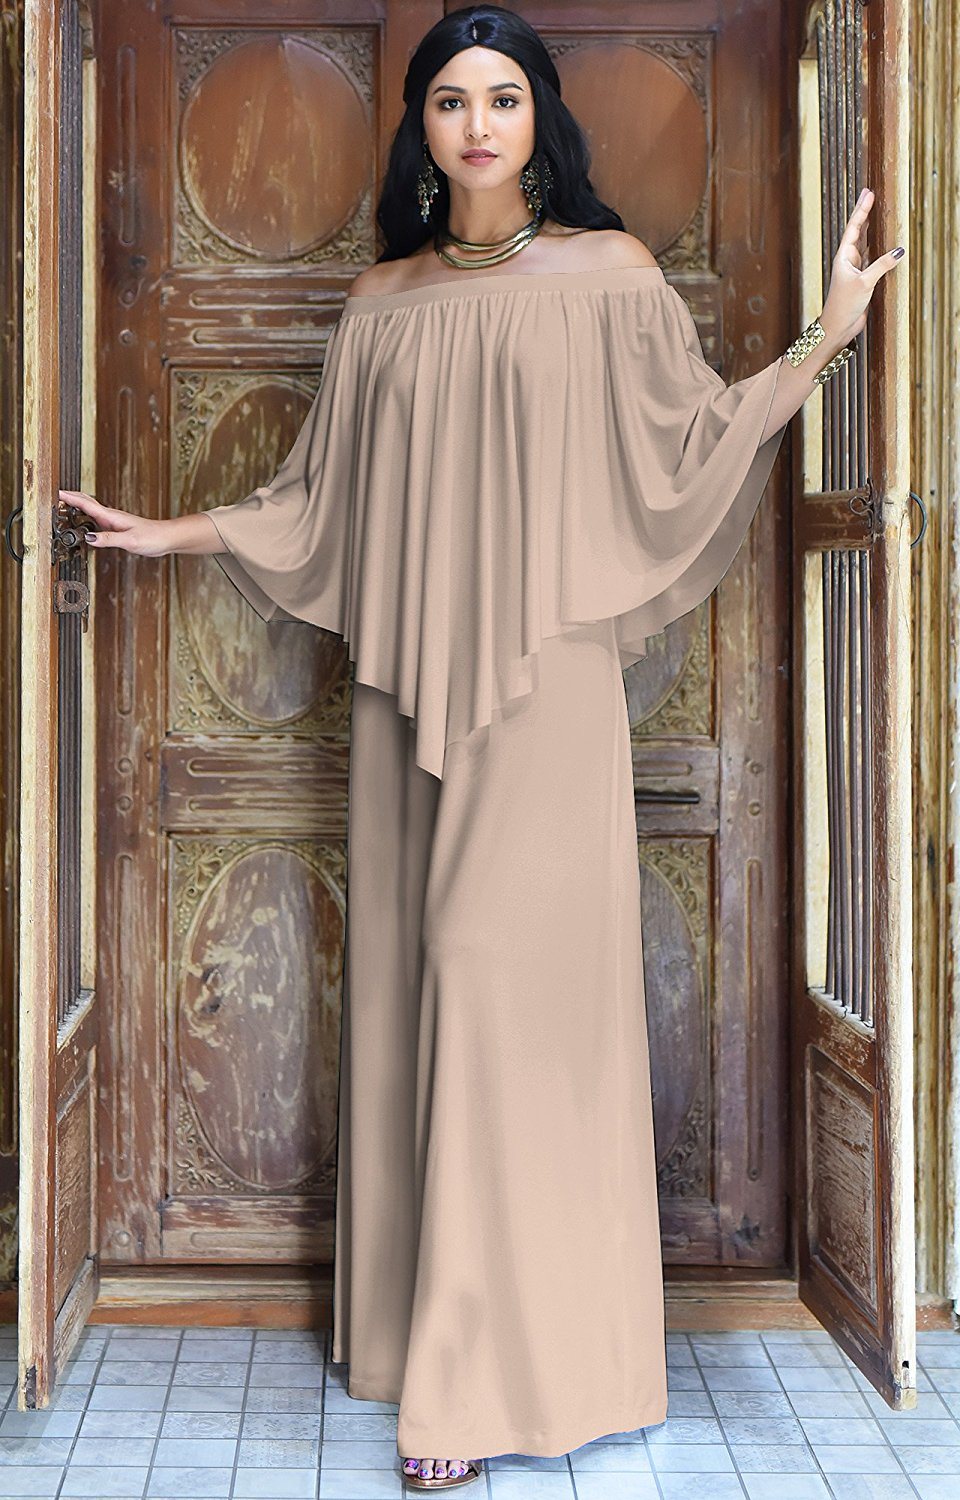 Popular Womens Long Strapless Shoulderless Flattering Cocktail Gown Maxi Dress